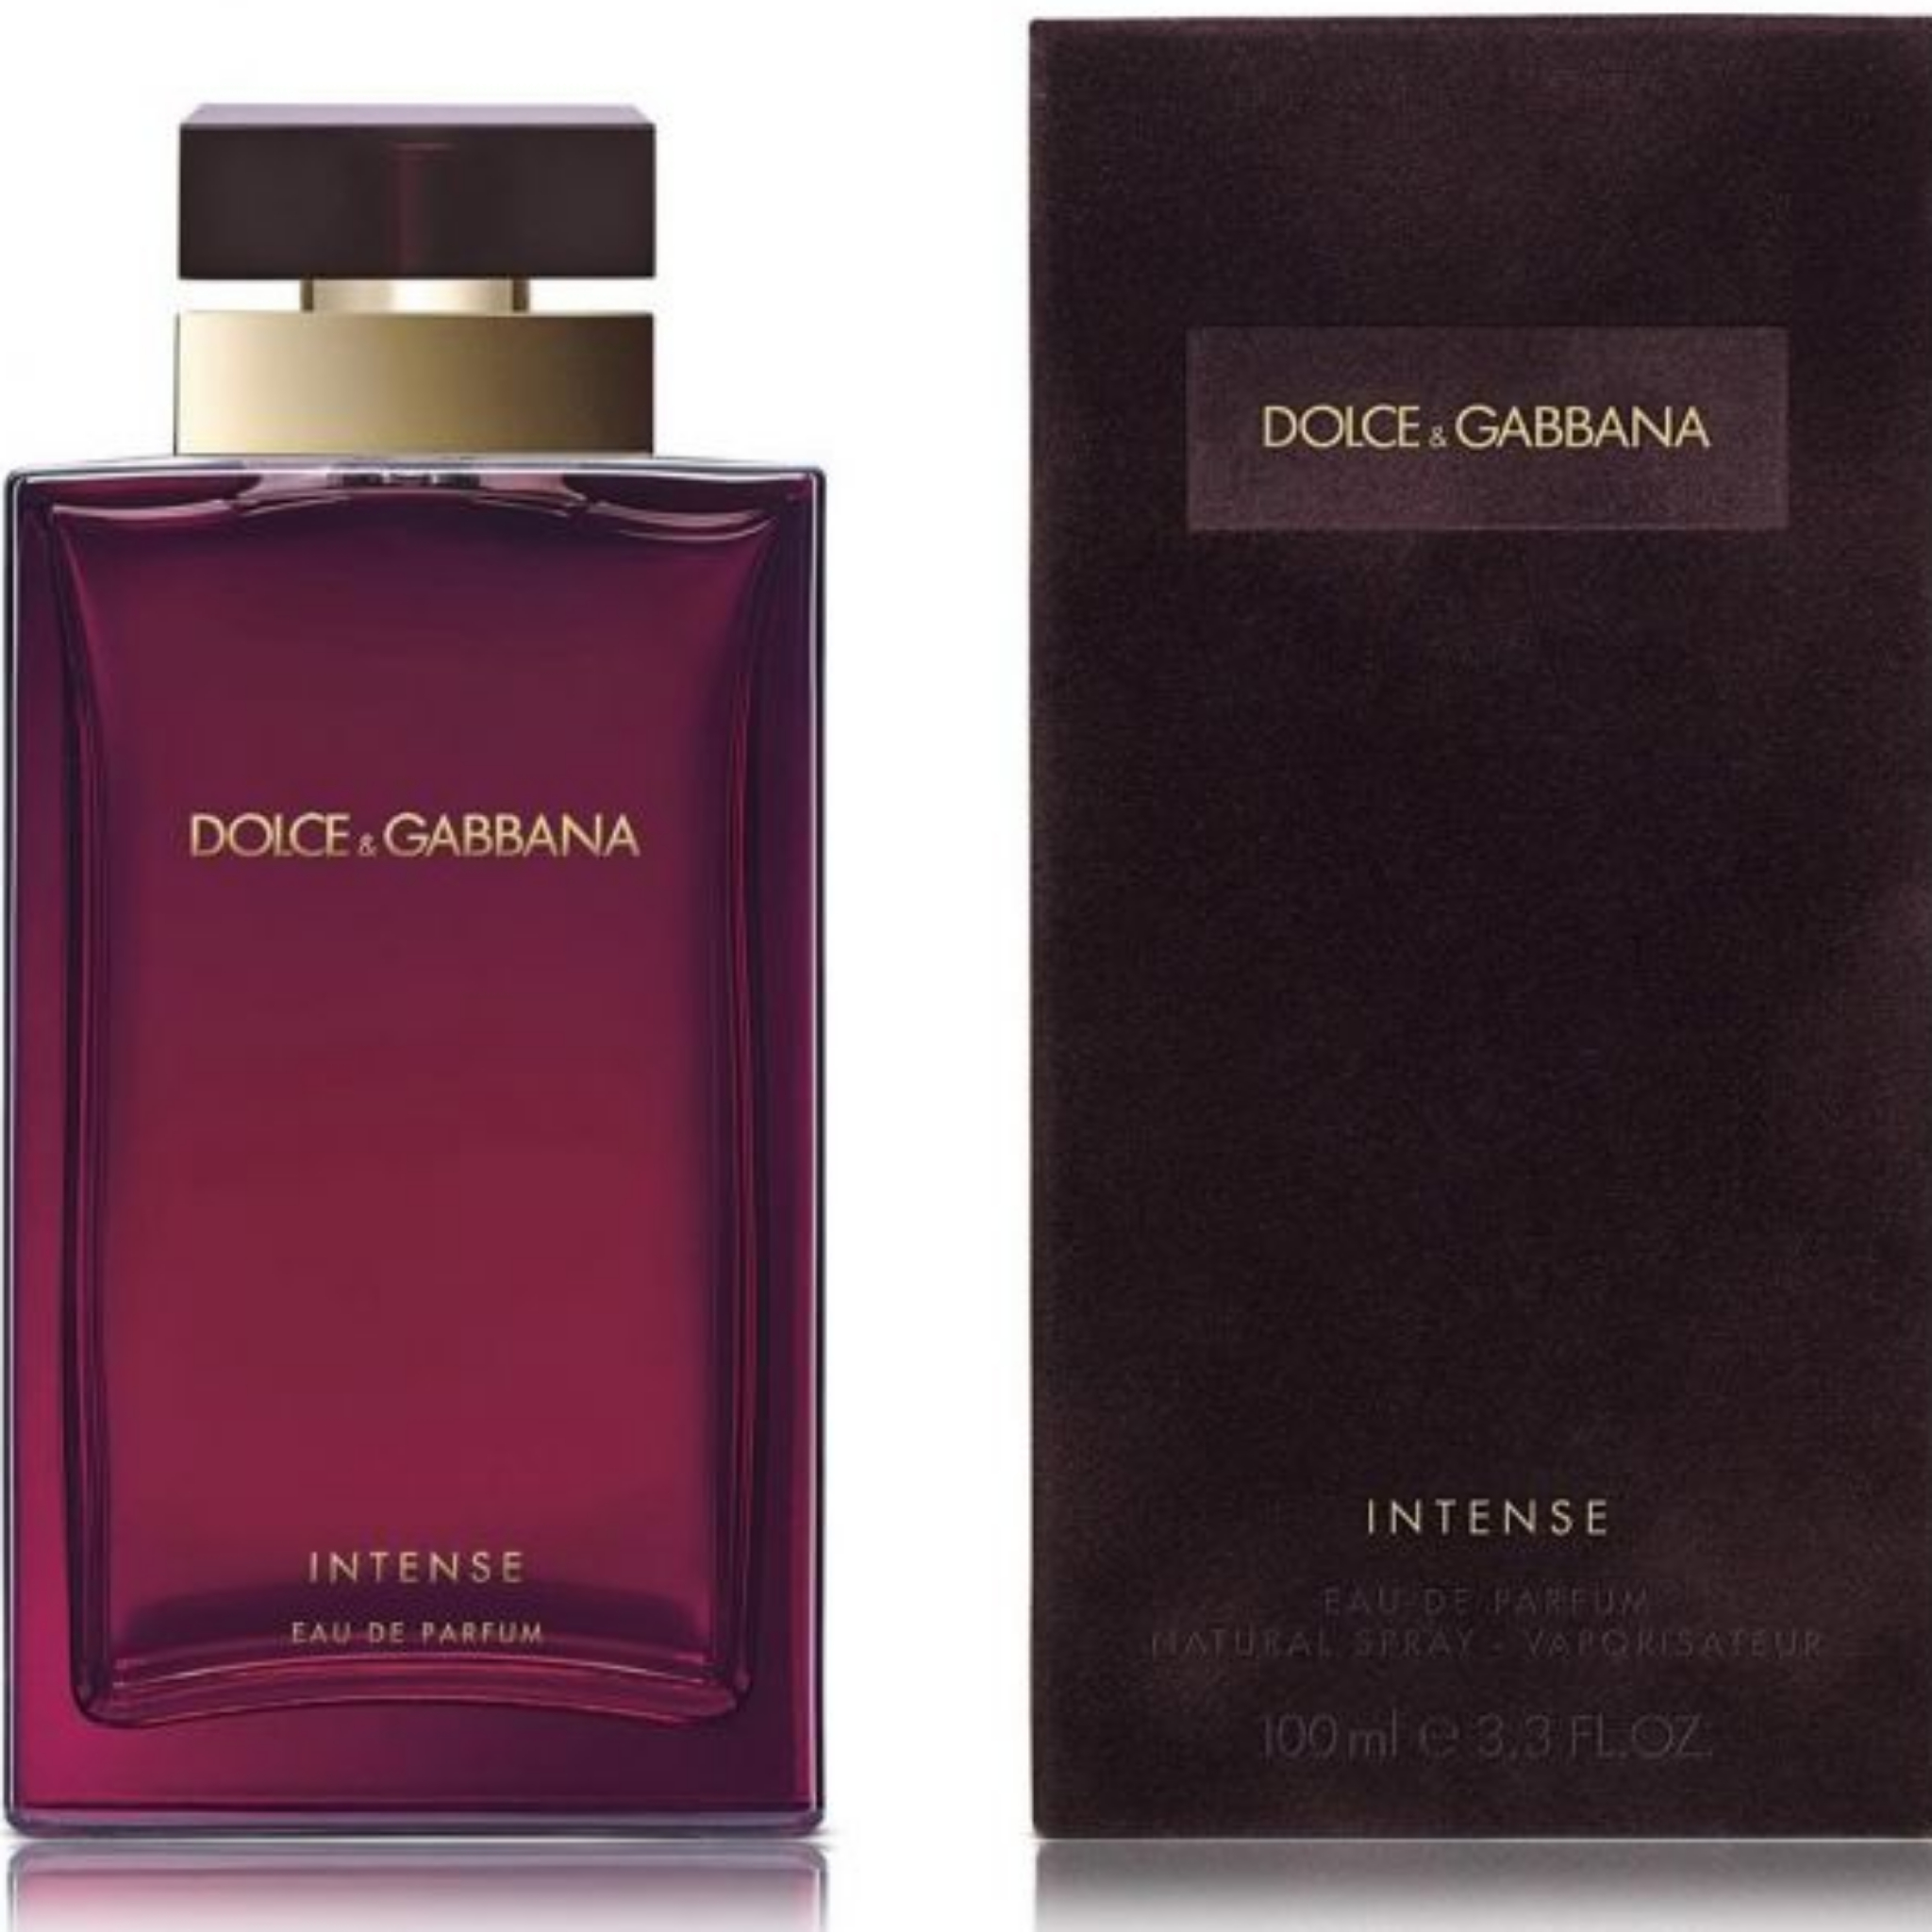 Дольче габбана интенс отзывы. Dolce & Gabbana pour femme intense EDP, 100 ml. Dolce & Gabbana pour femme 100 мл. Дольче Габбана Интенс 100. Духи Дольче Габбана Пур Фемме Интенс.